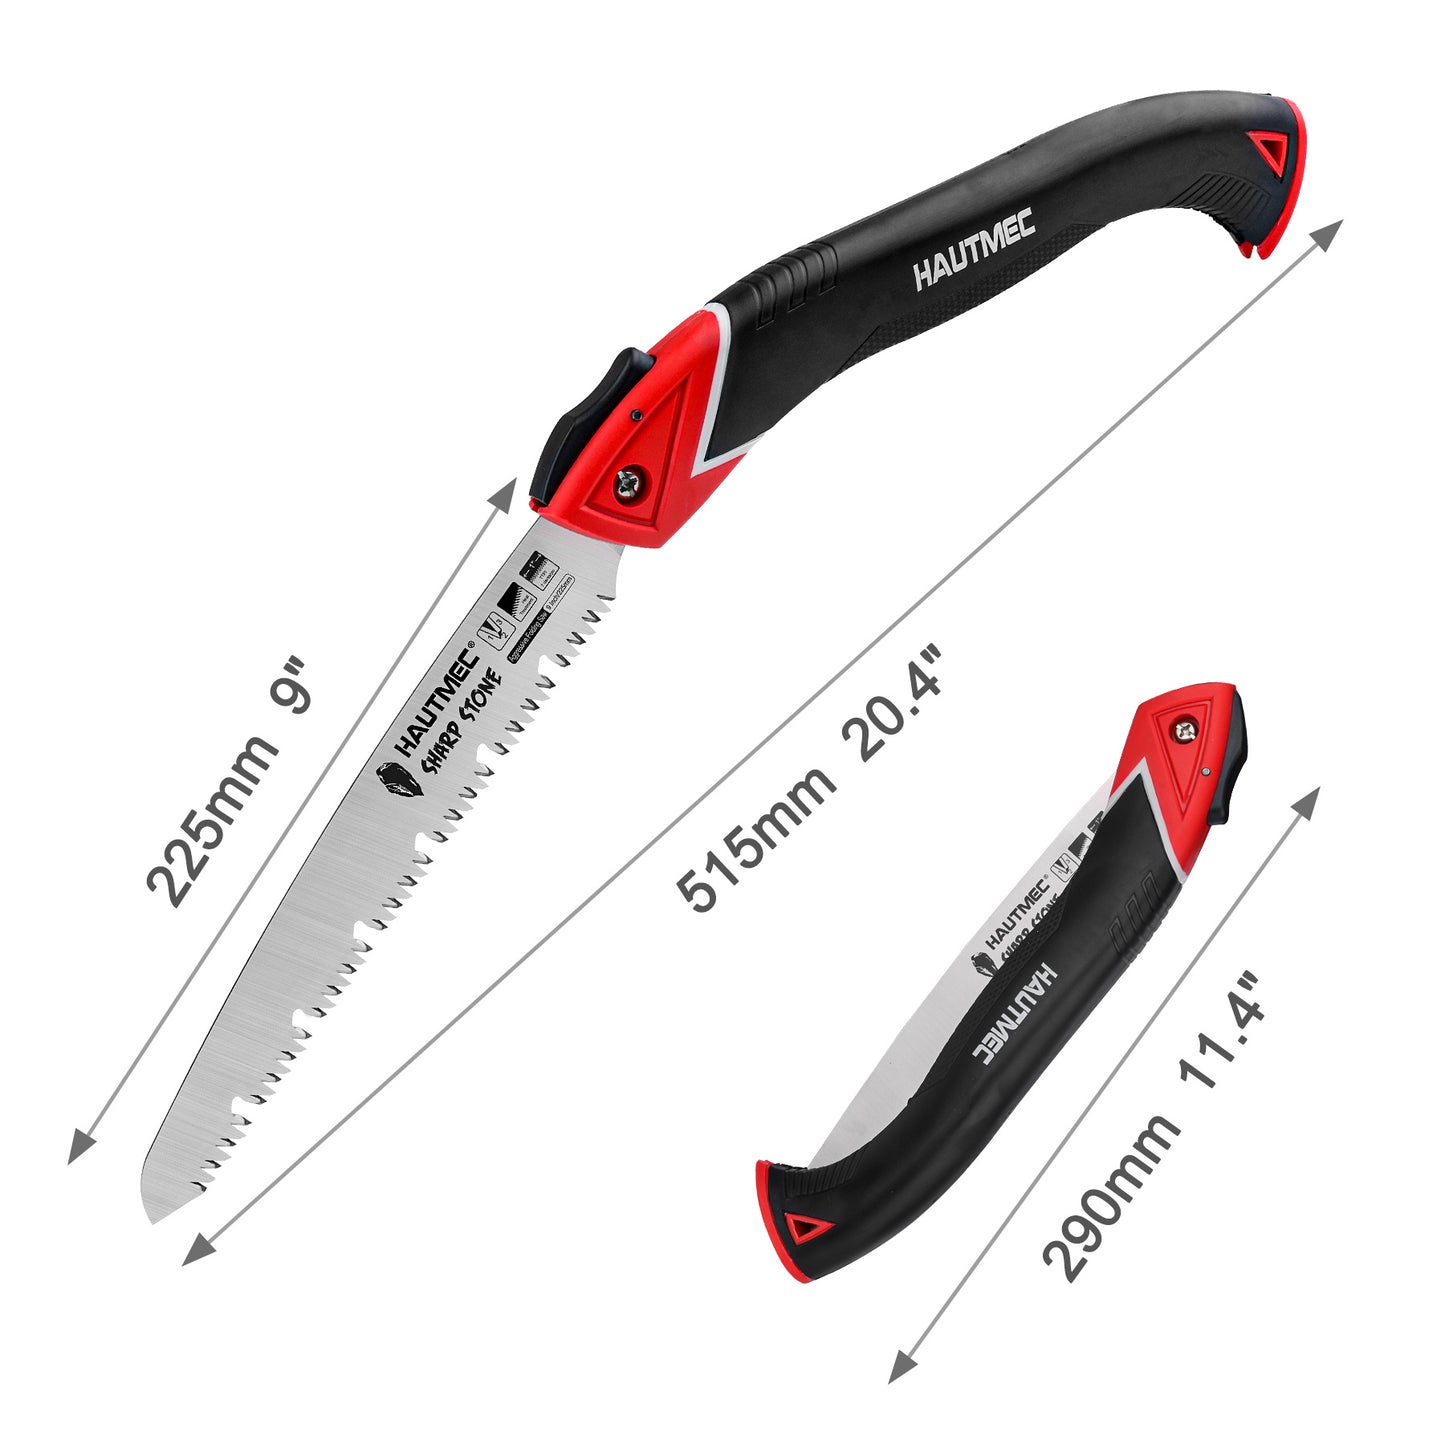 HAUTMEC 9 Inch Pro Folding Pruning Handsaw of Sharp Stone Serie, SK5 Blade, Precision Hardened Triple-cut Teeth, Deep Gullets for Swift Chip HT0304